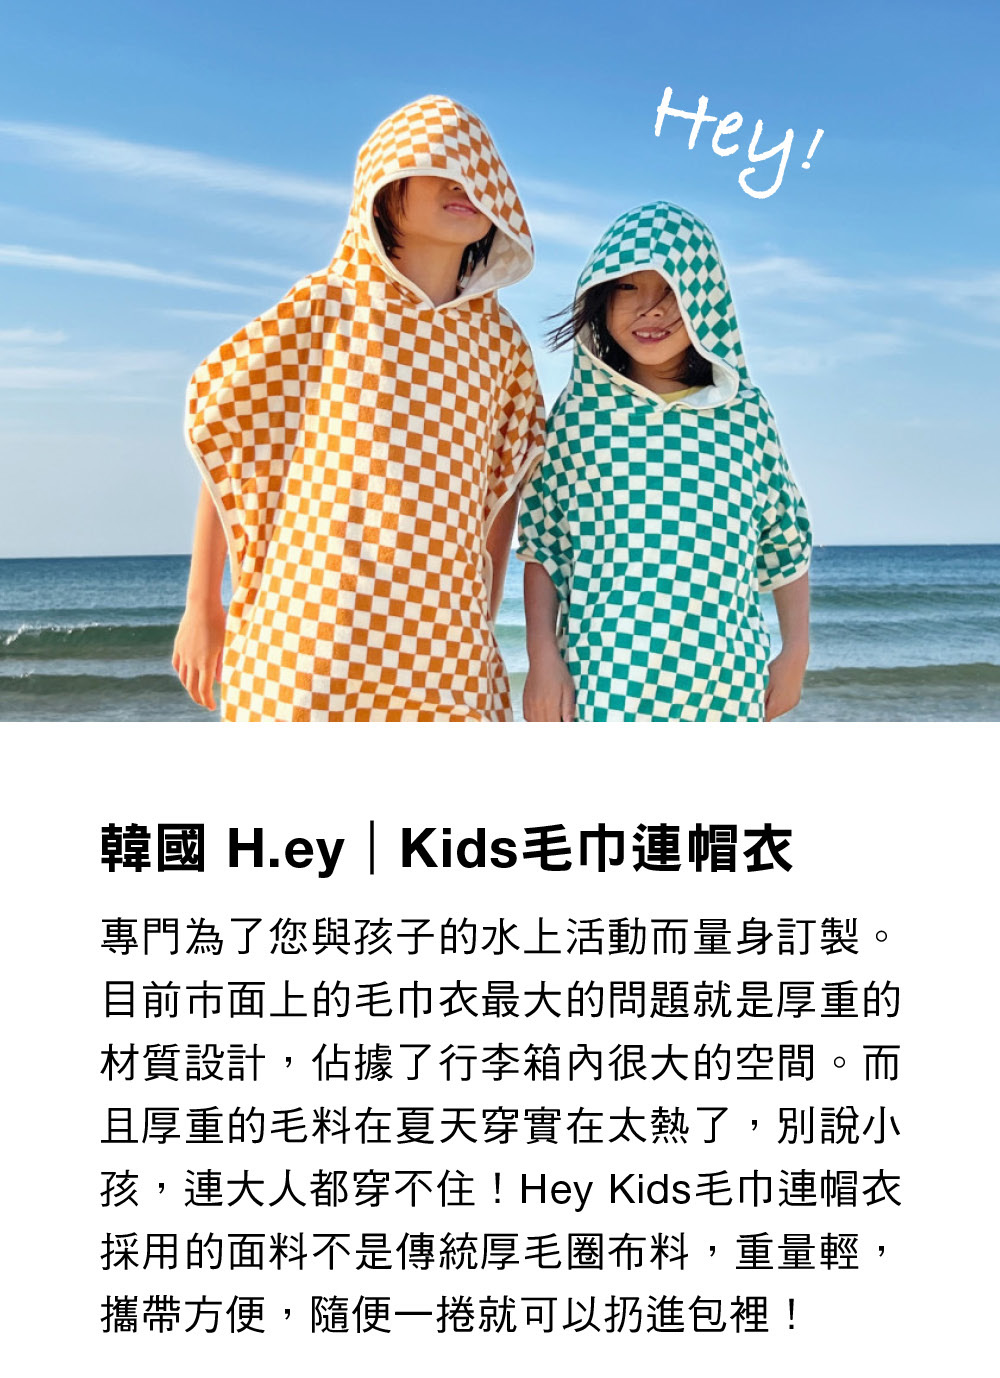 H.ey Kids毛巾連帽衣(條紋粉)折扣推薦